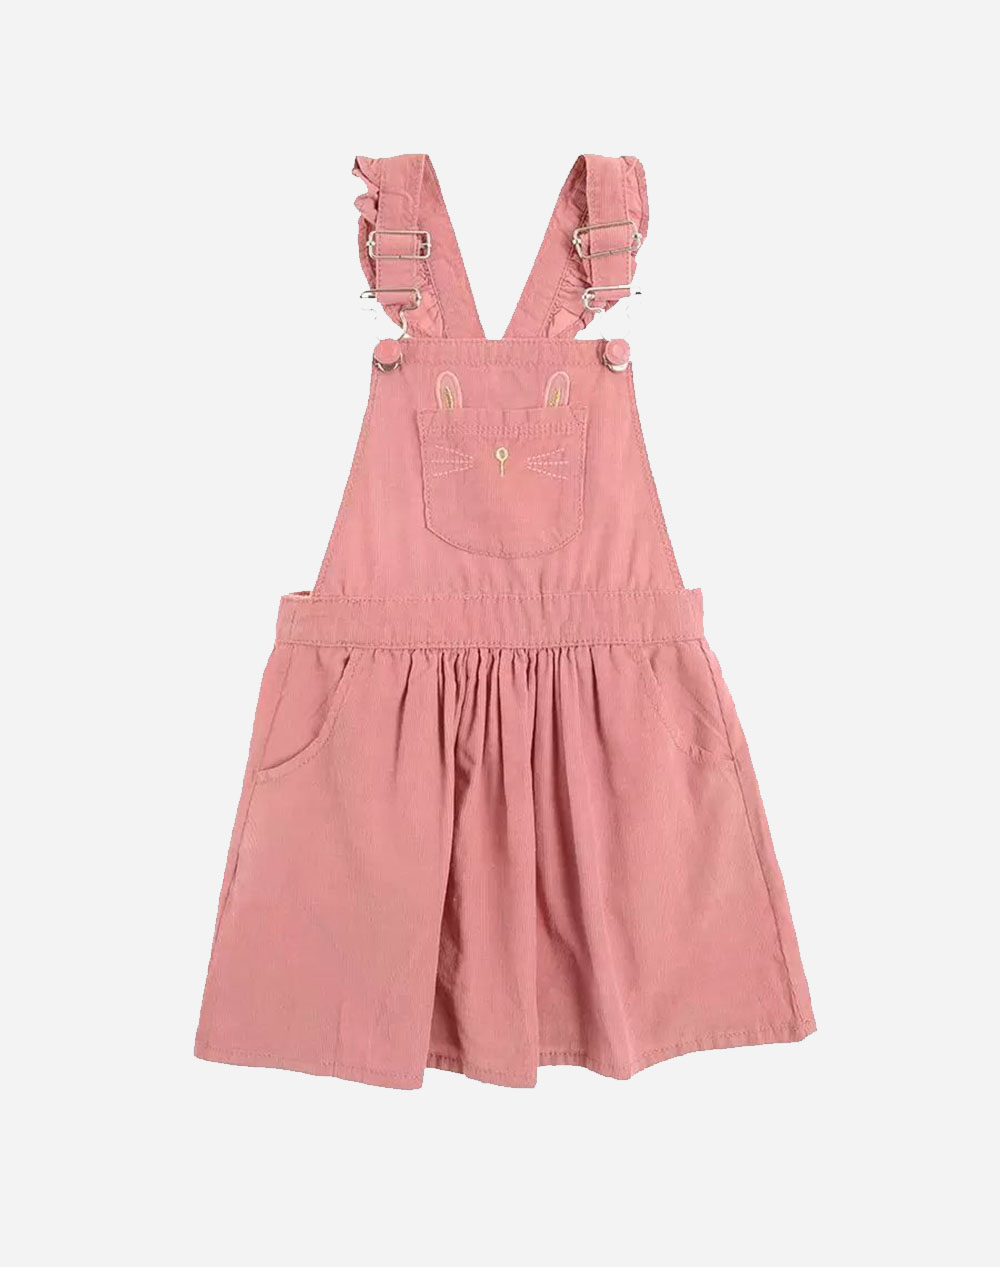 COOL CLUB Σαλοπέτα φούστα ΚΟΡΙΤΣΙ (2-8) CCG2512047-PINK Pink